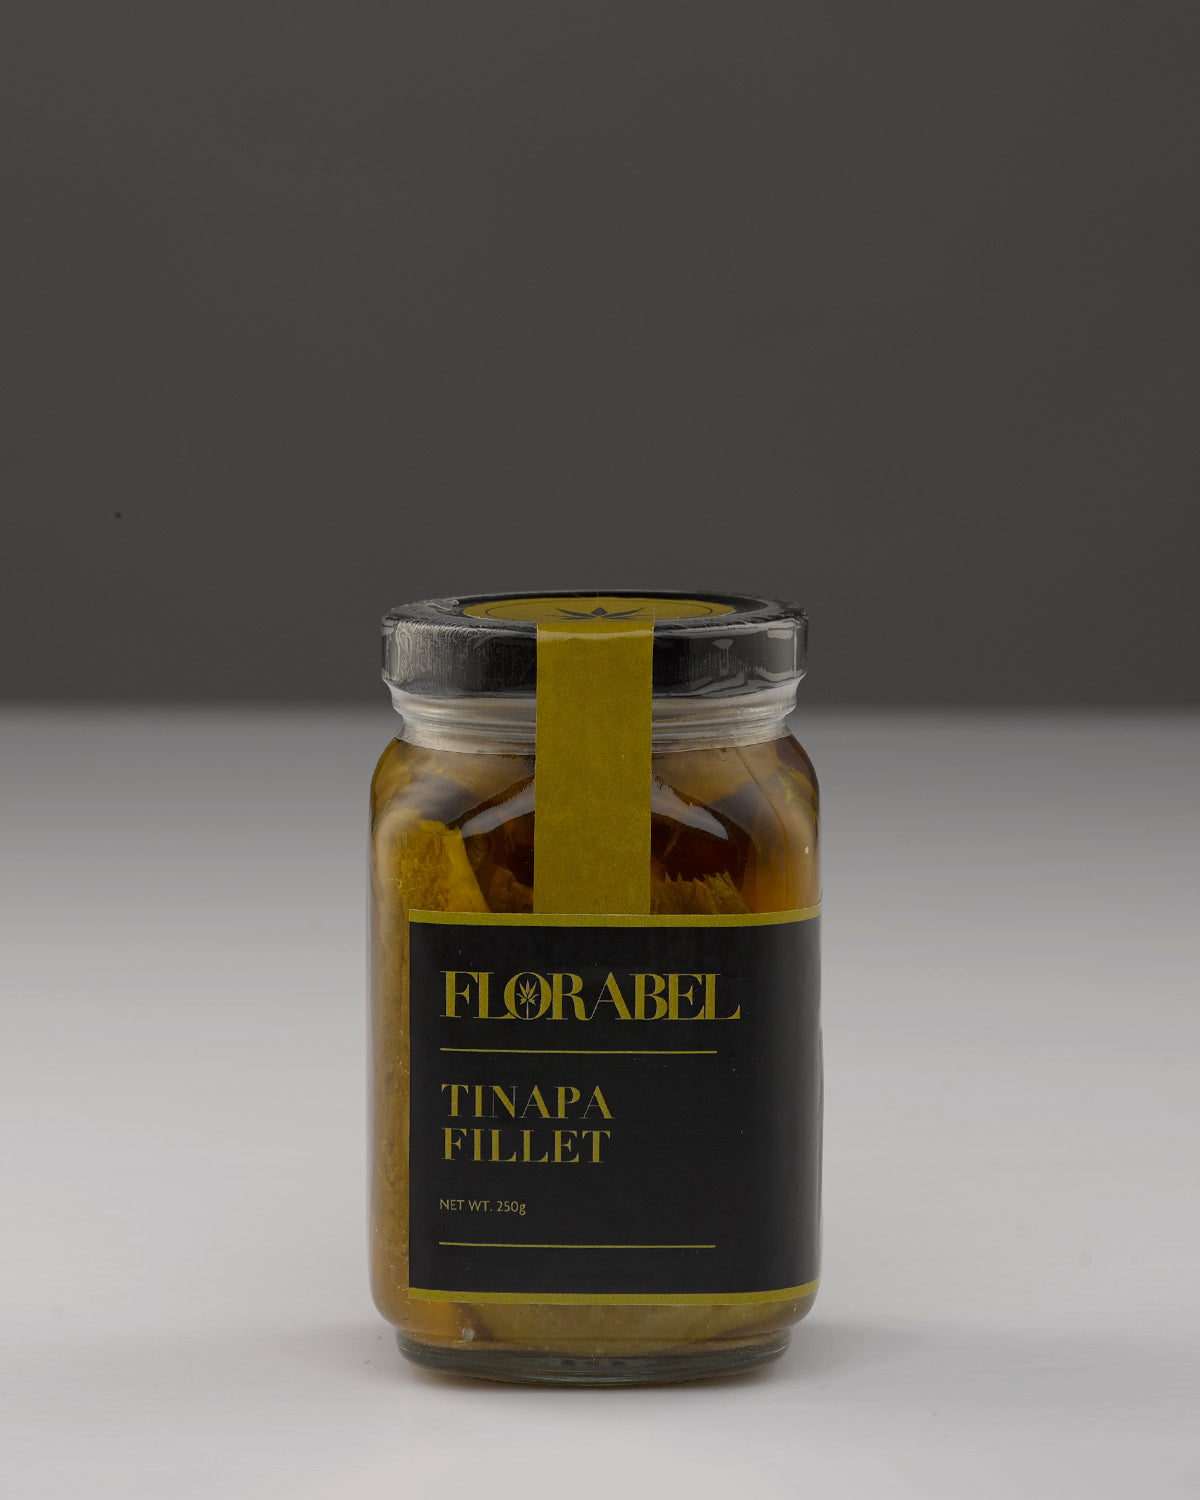 Florabel Tinapa Fillet